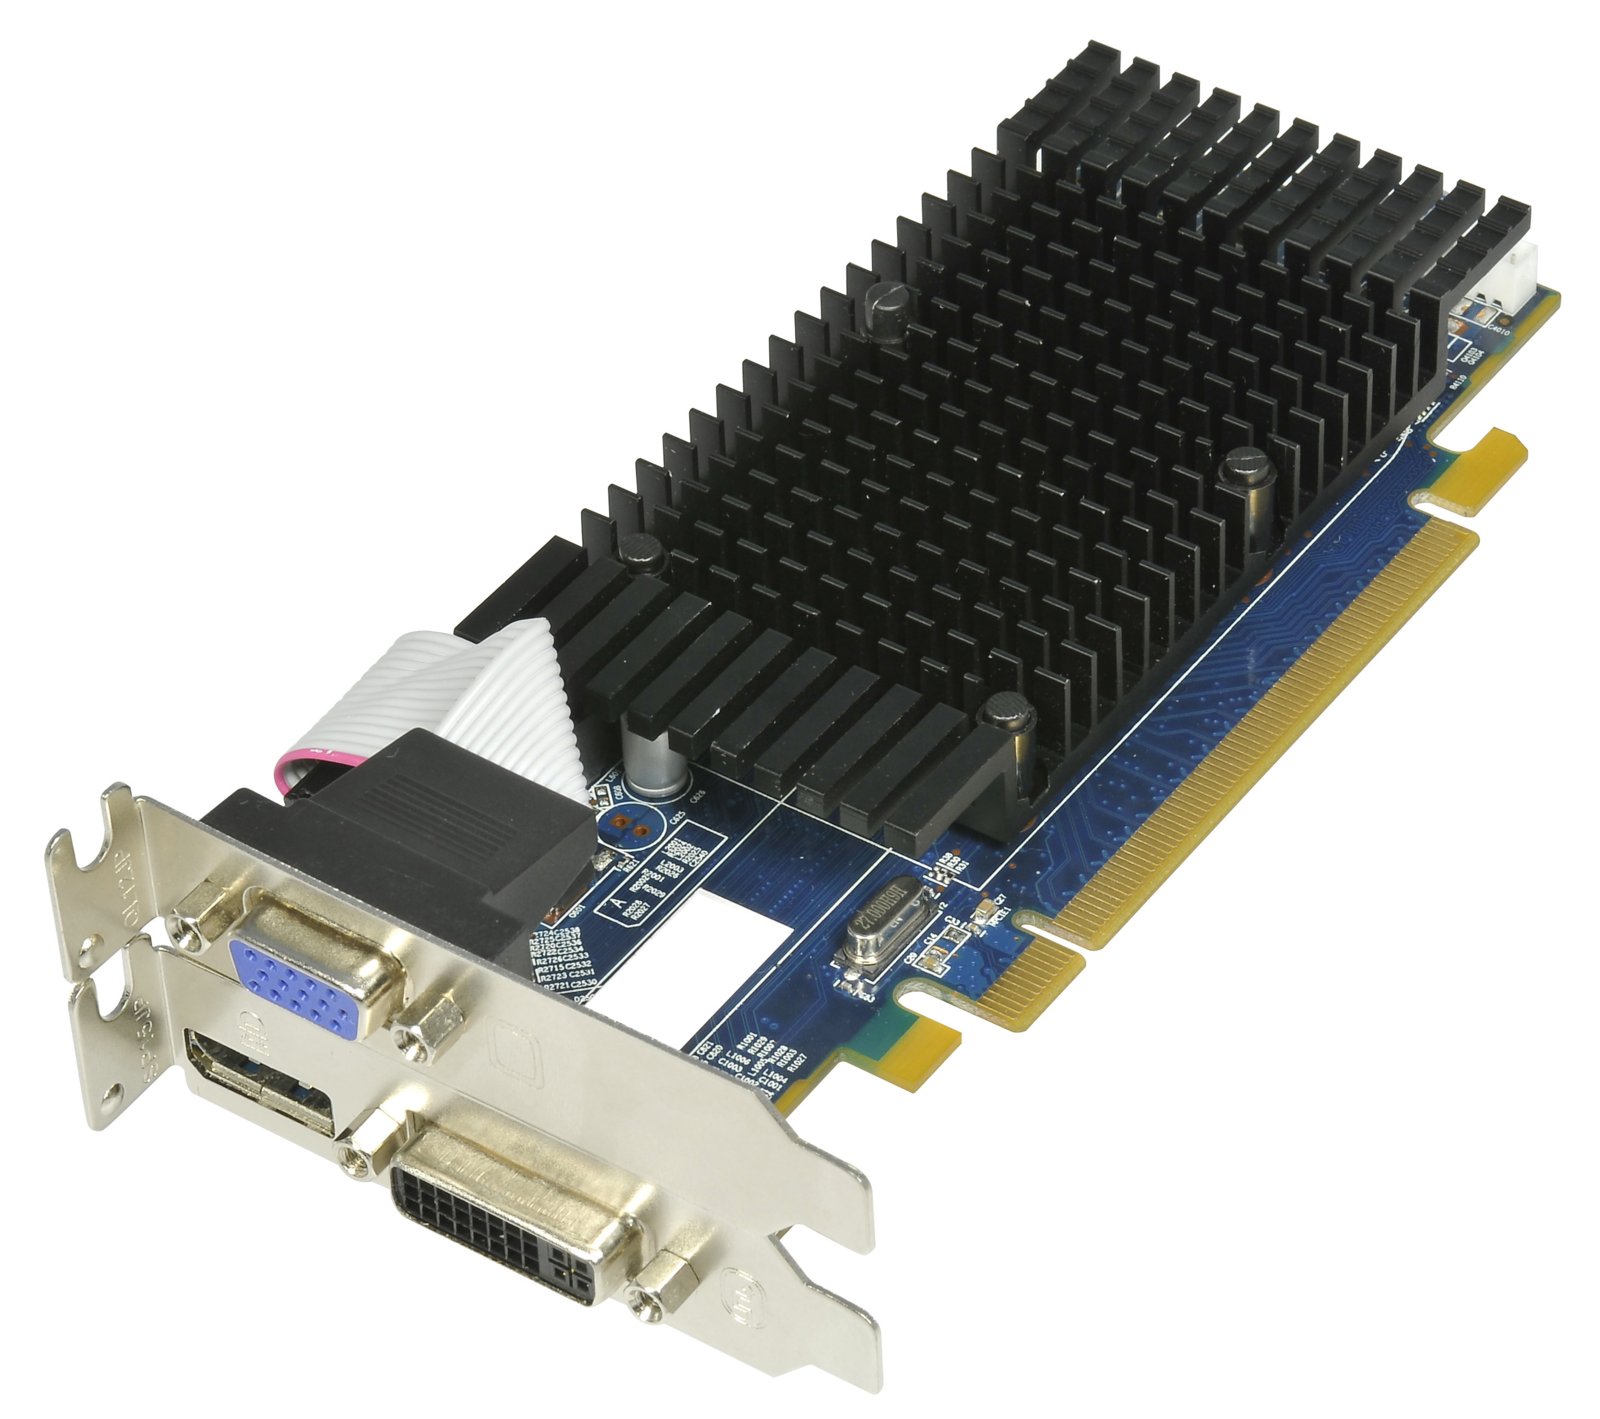 HIS 5450 Silence 1GB DDR3 PCI-E DP/DVI 